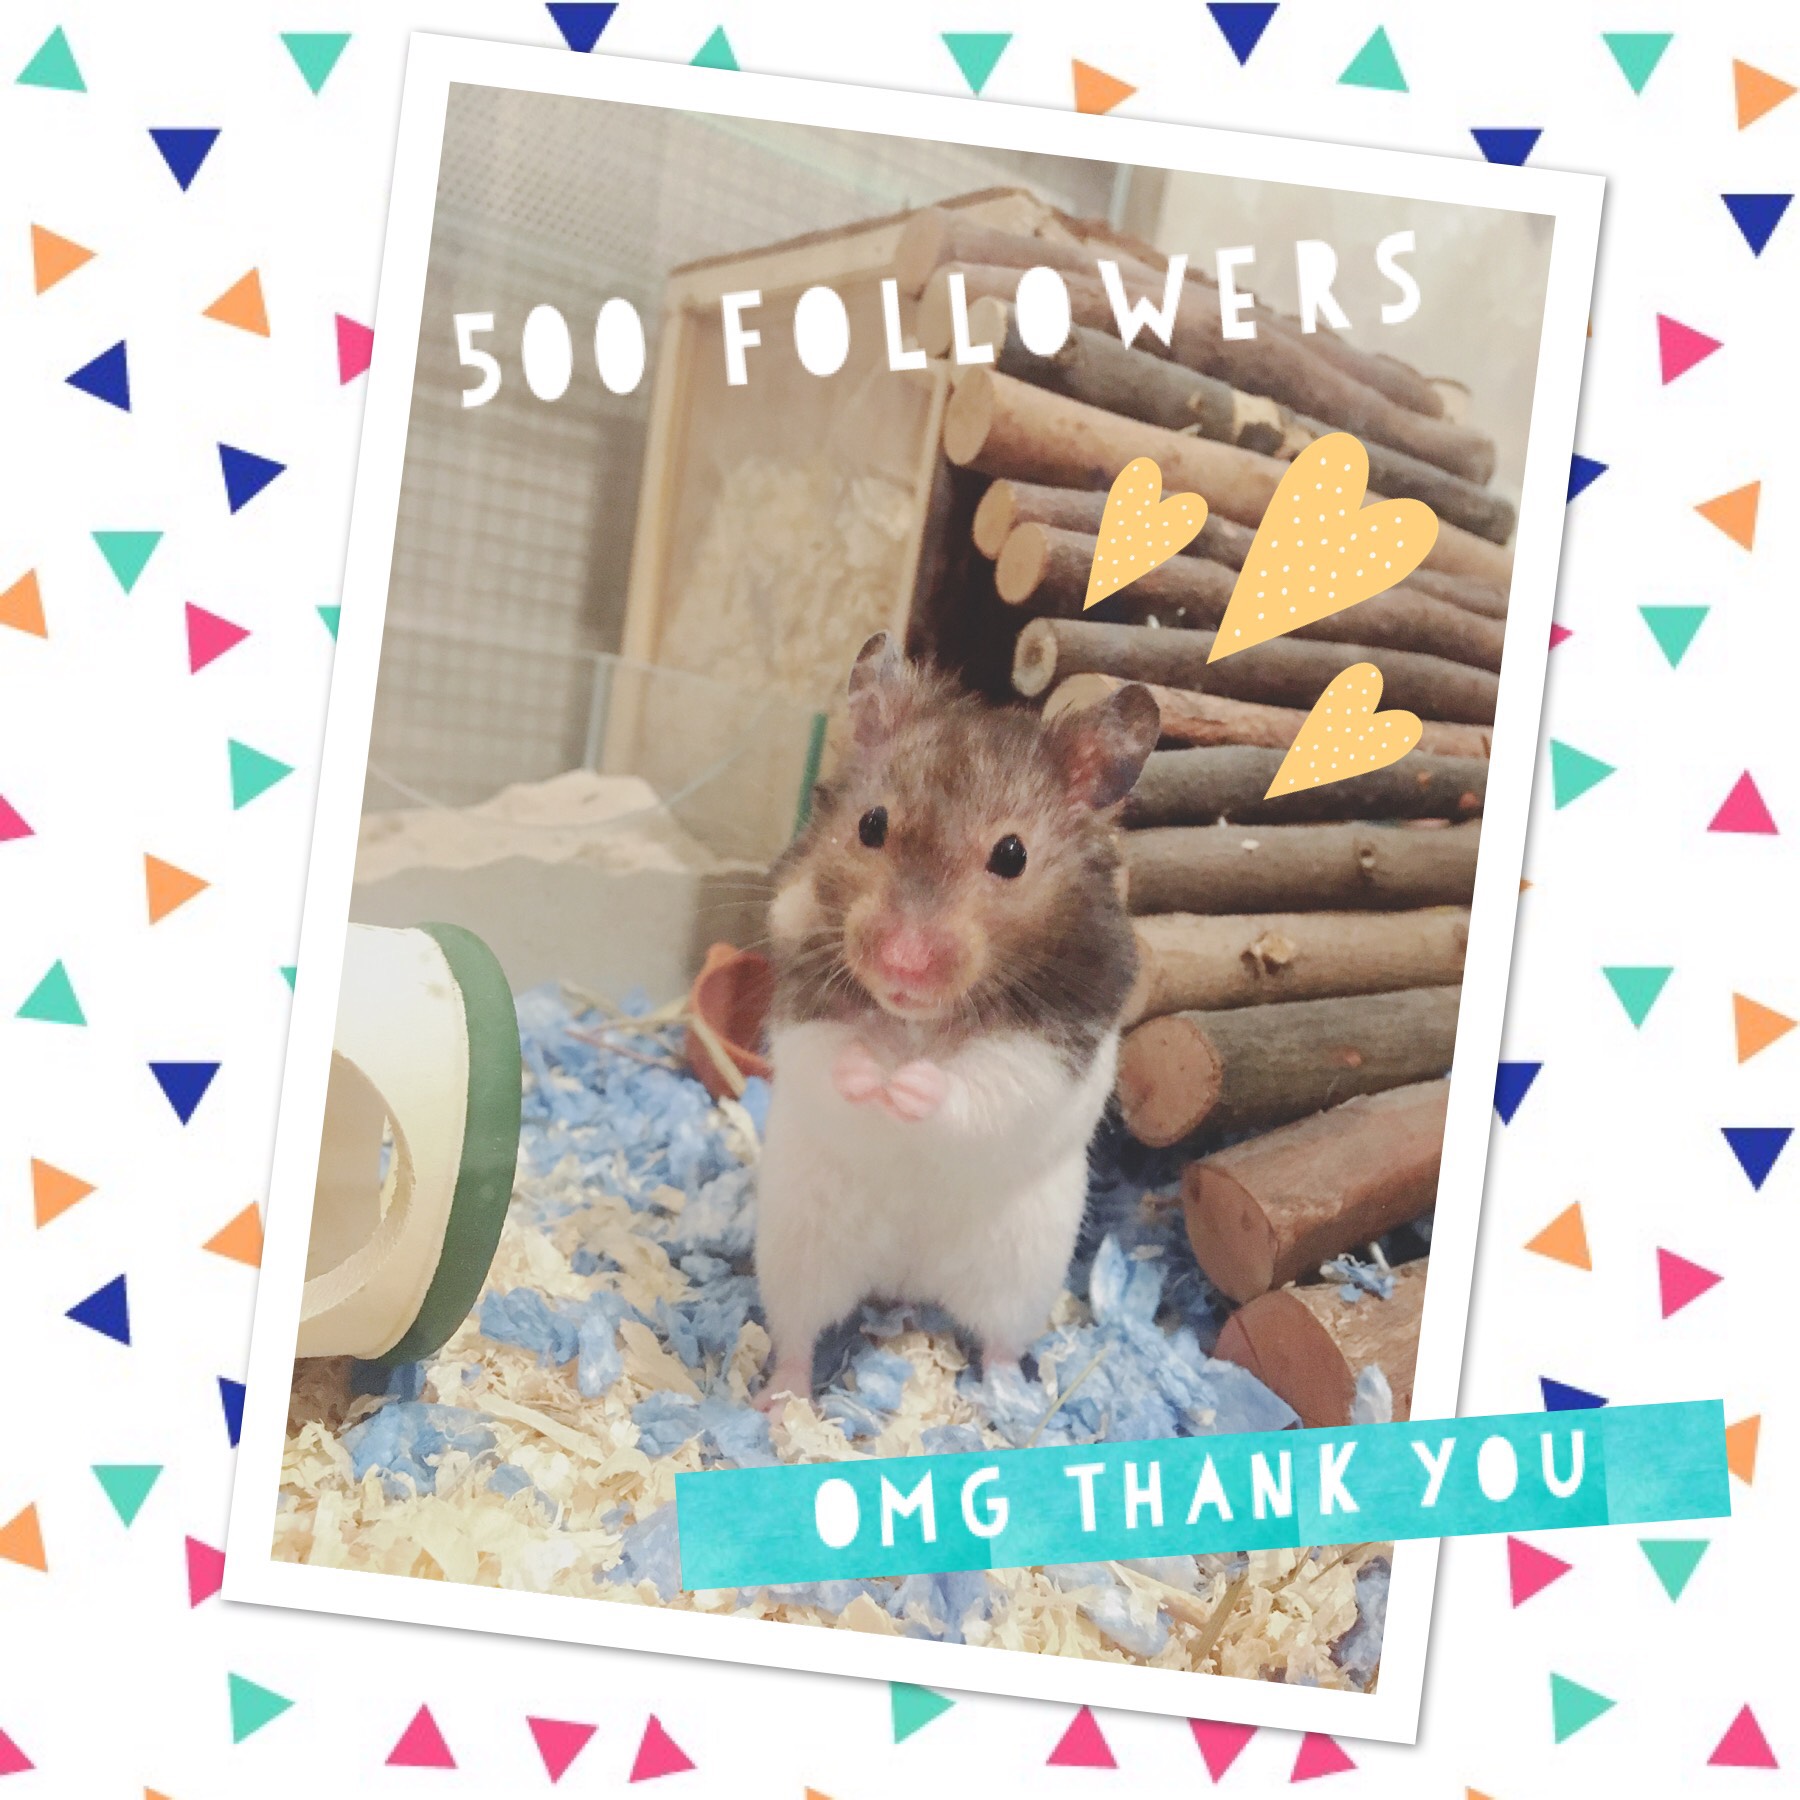 My hamster JarJar got 500 followers today :D yay